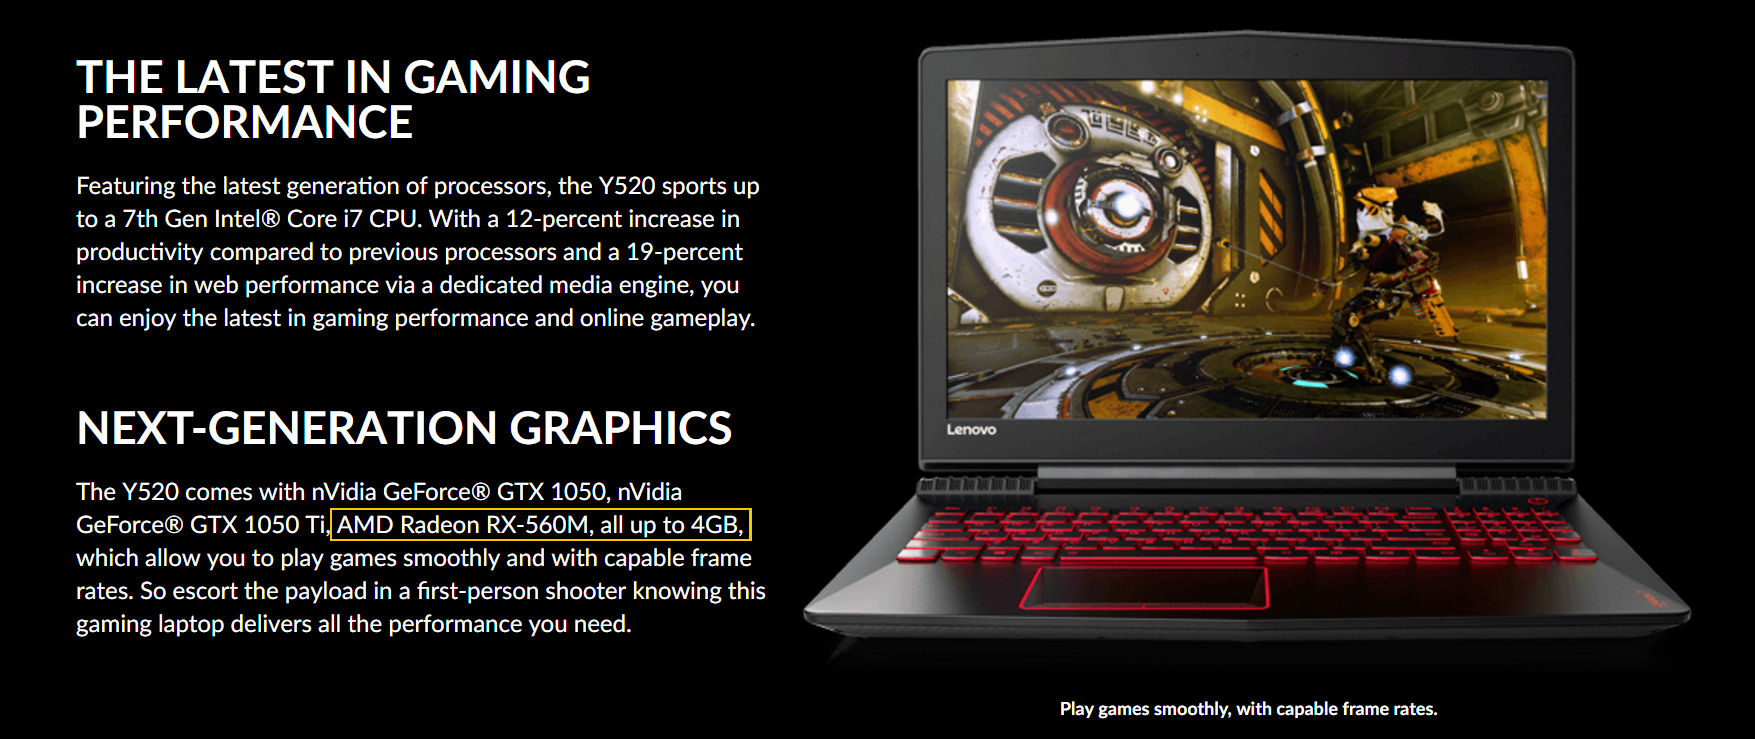 Lenovo accidentally reveal AMD's RX 560M GPU